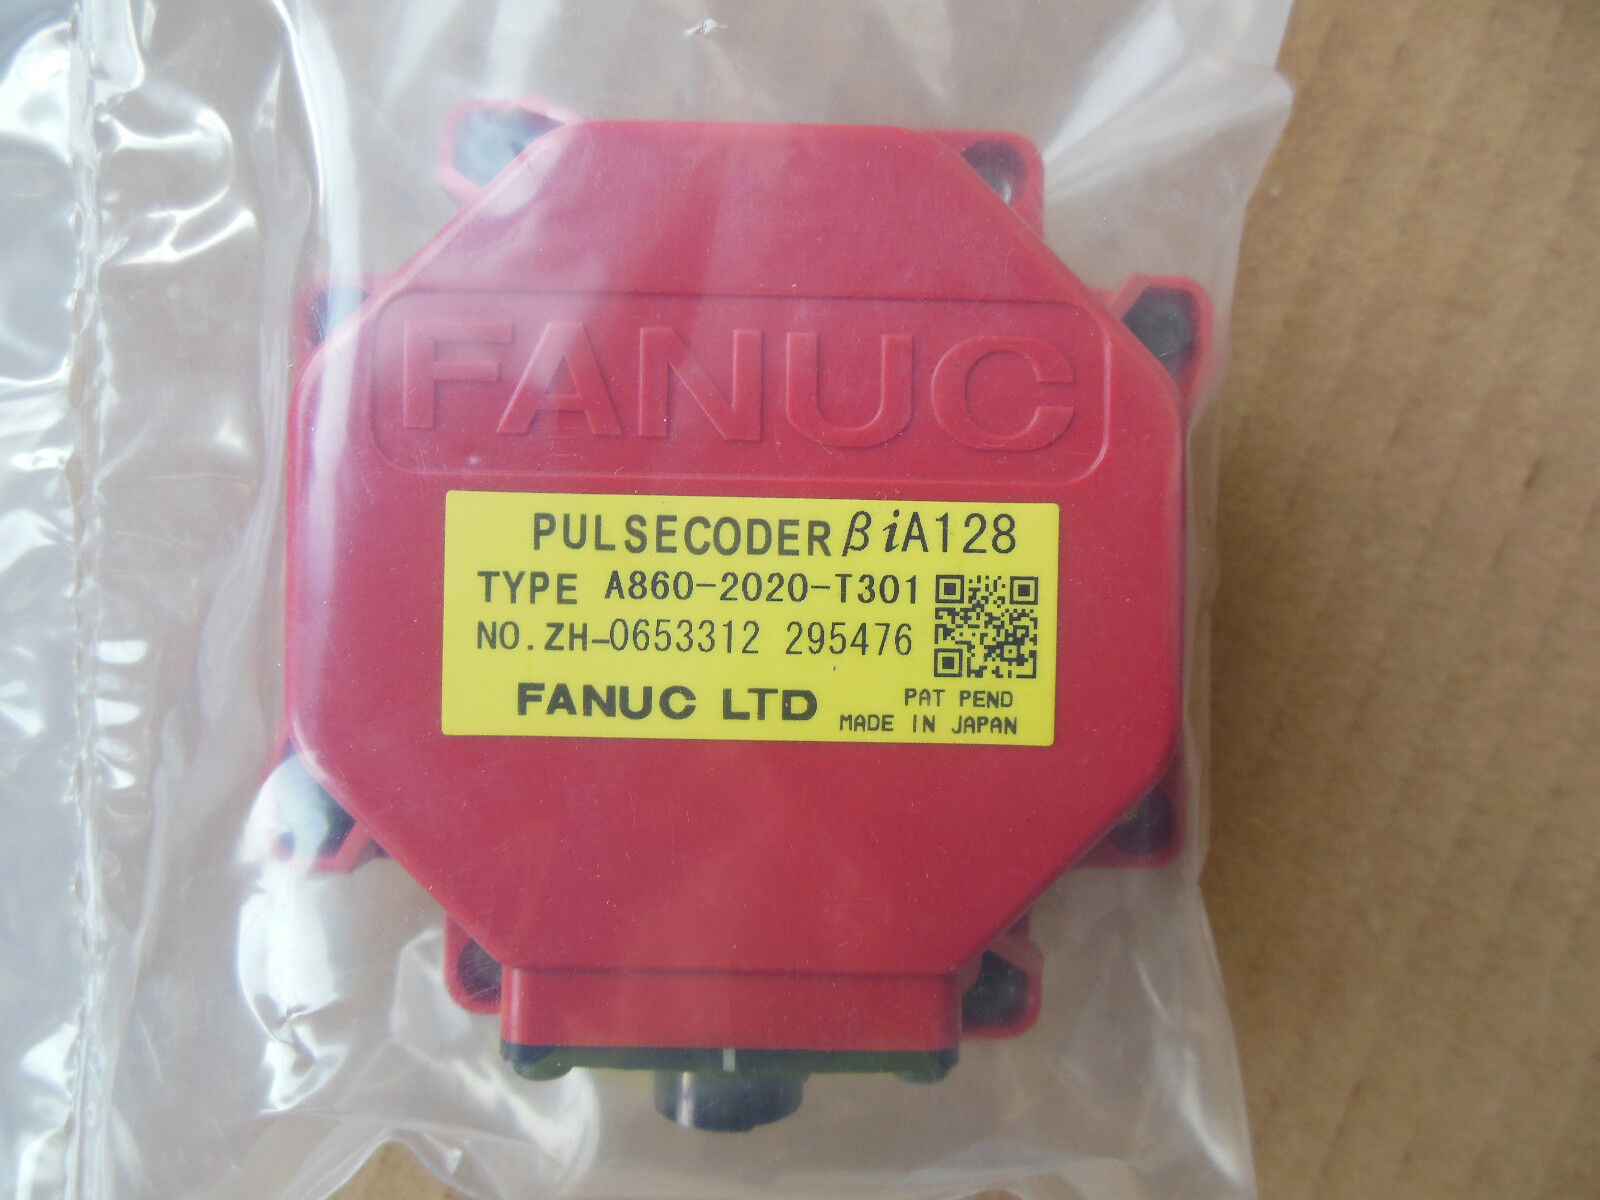 NEW FANUC A860-2020-T301 FANUC A8602020T301 PULSE CODER -